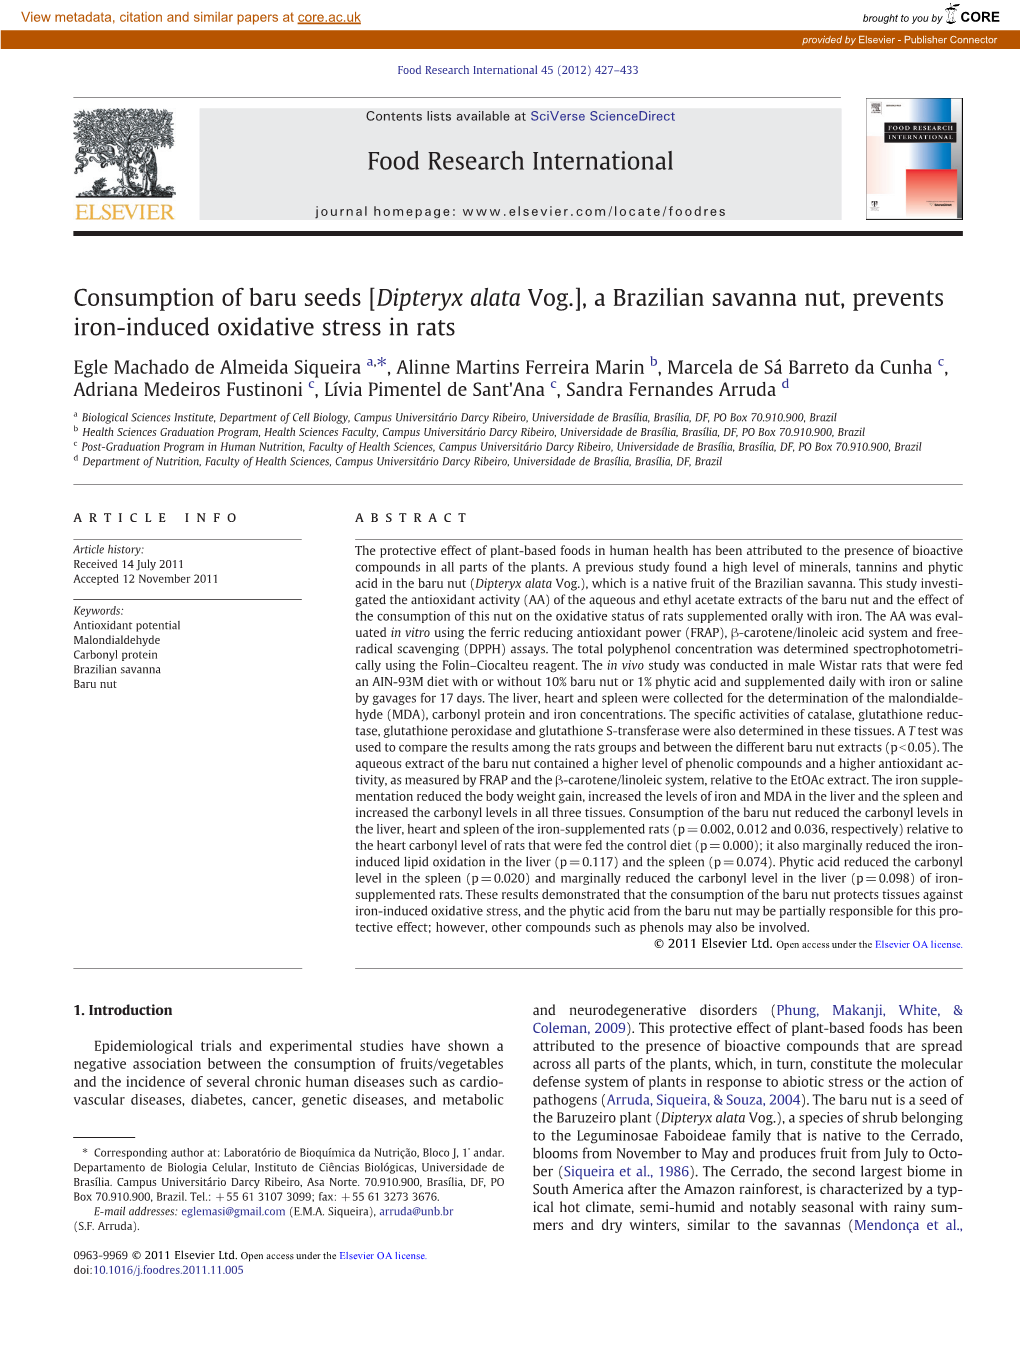 Consumption of Baru Seeds [Dipteryx Alata Vog.], a Brazilian Savanna Nut, Prevents Iron-Induced Oxidative Stress in Rats